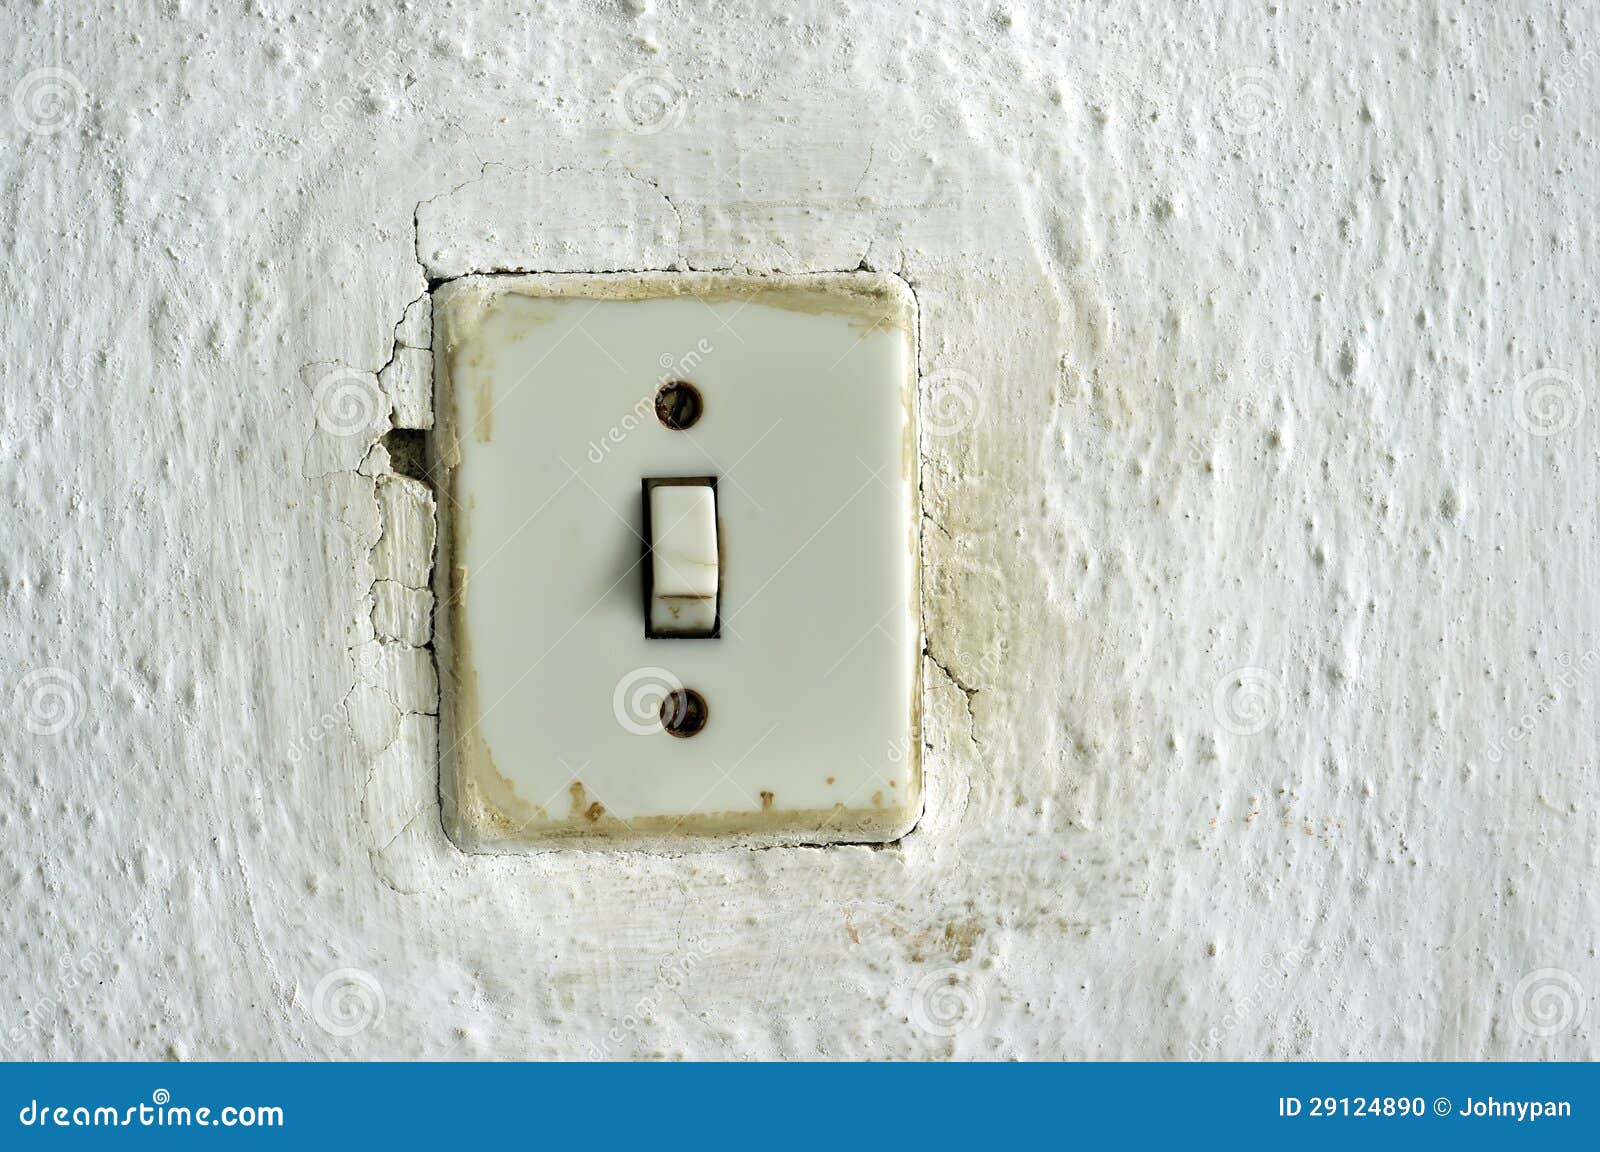 old-light-switch-29124890.jpg